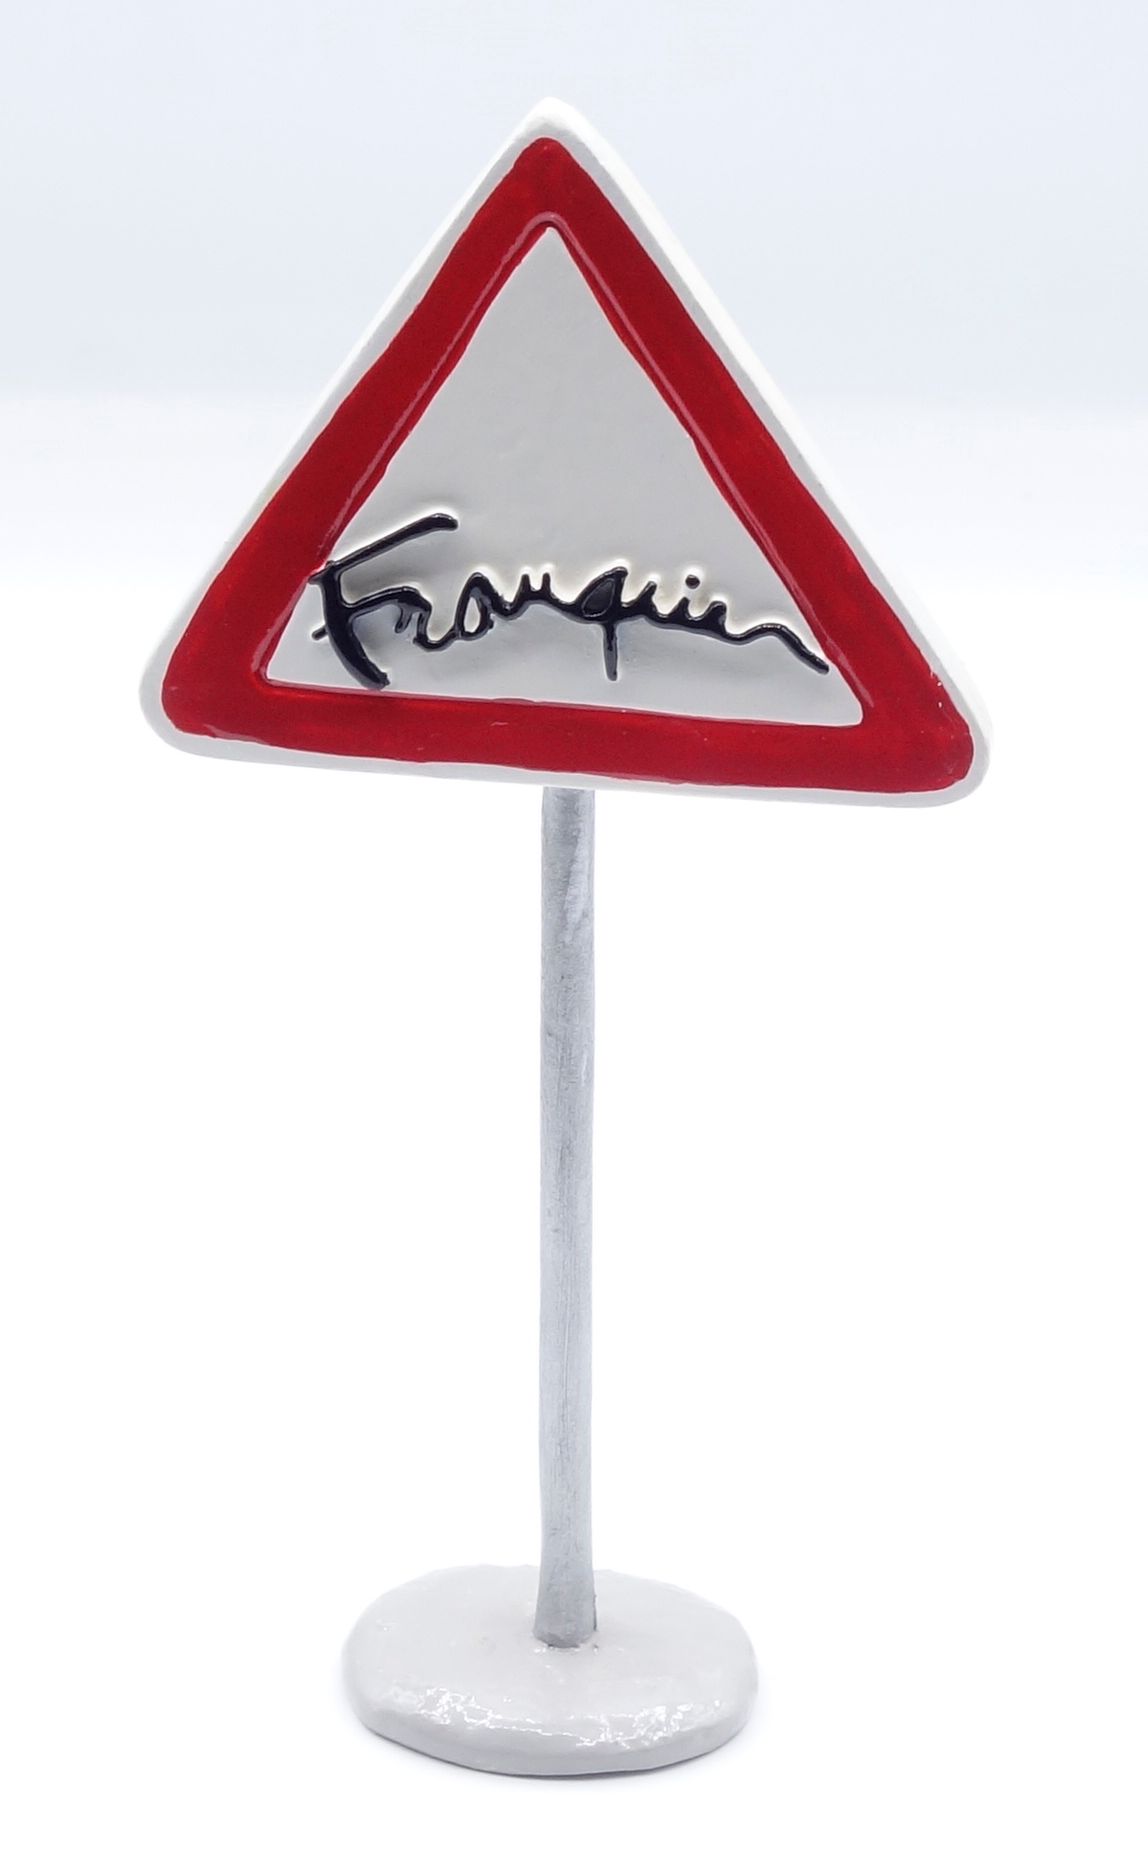 André FRANQUIN 
PIXI: Firmas Franquin, señal de tráfico 3770, 2007, n°/400, BC.